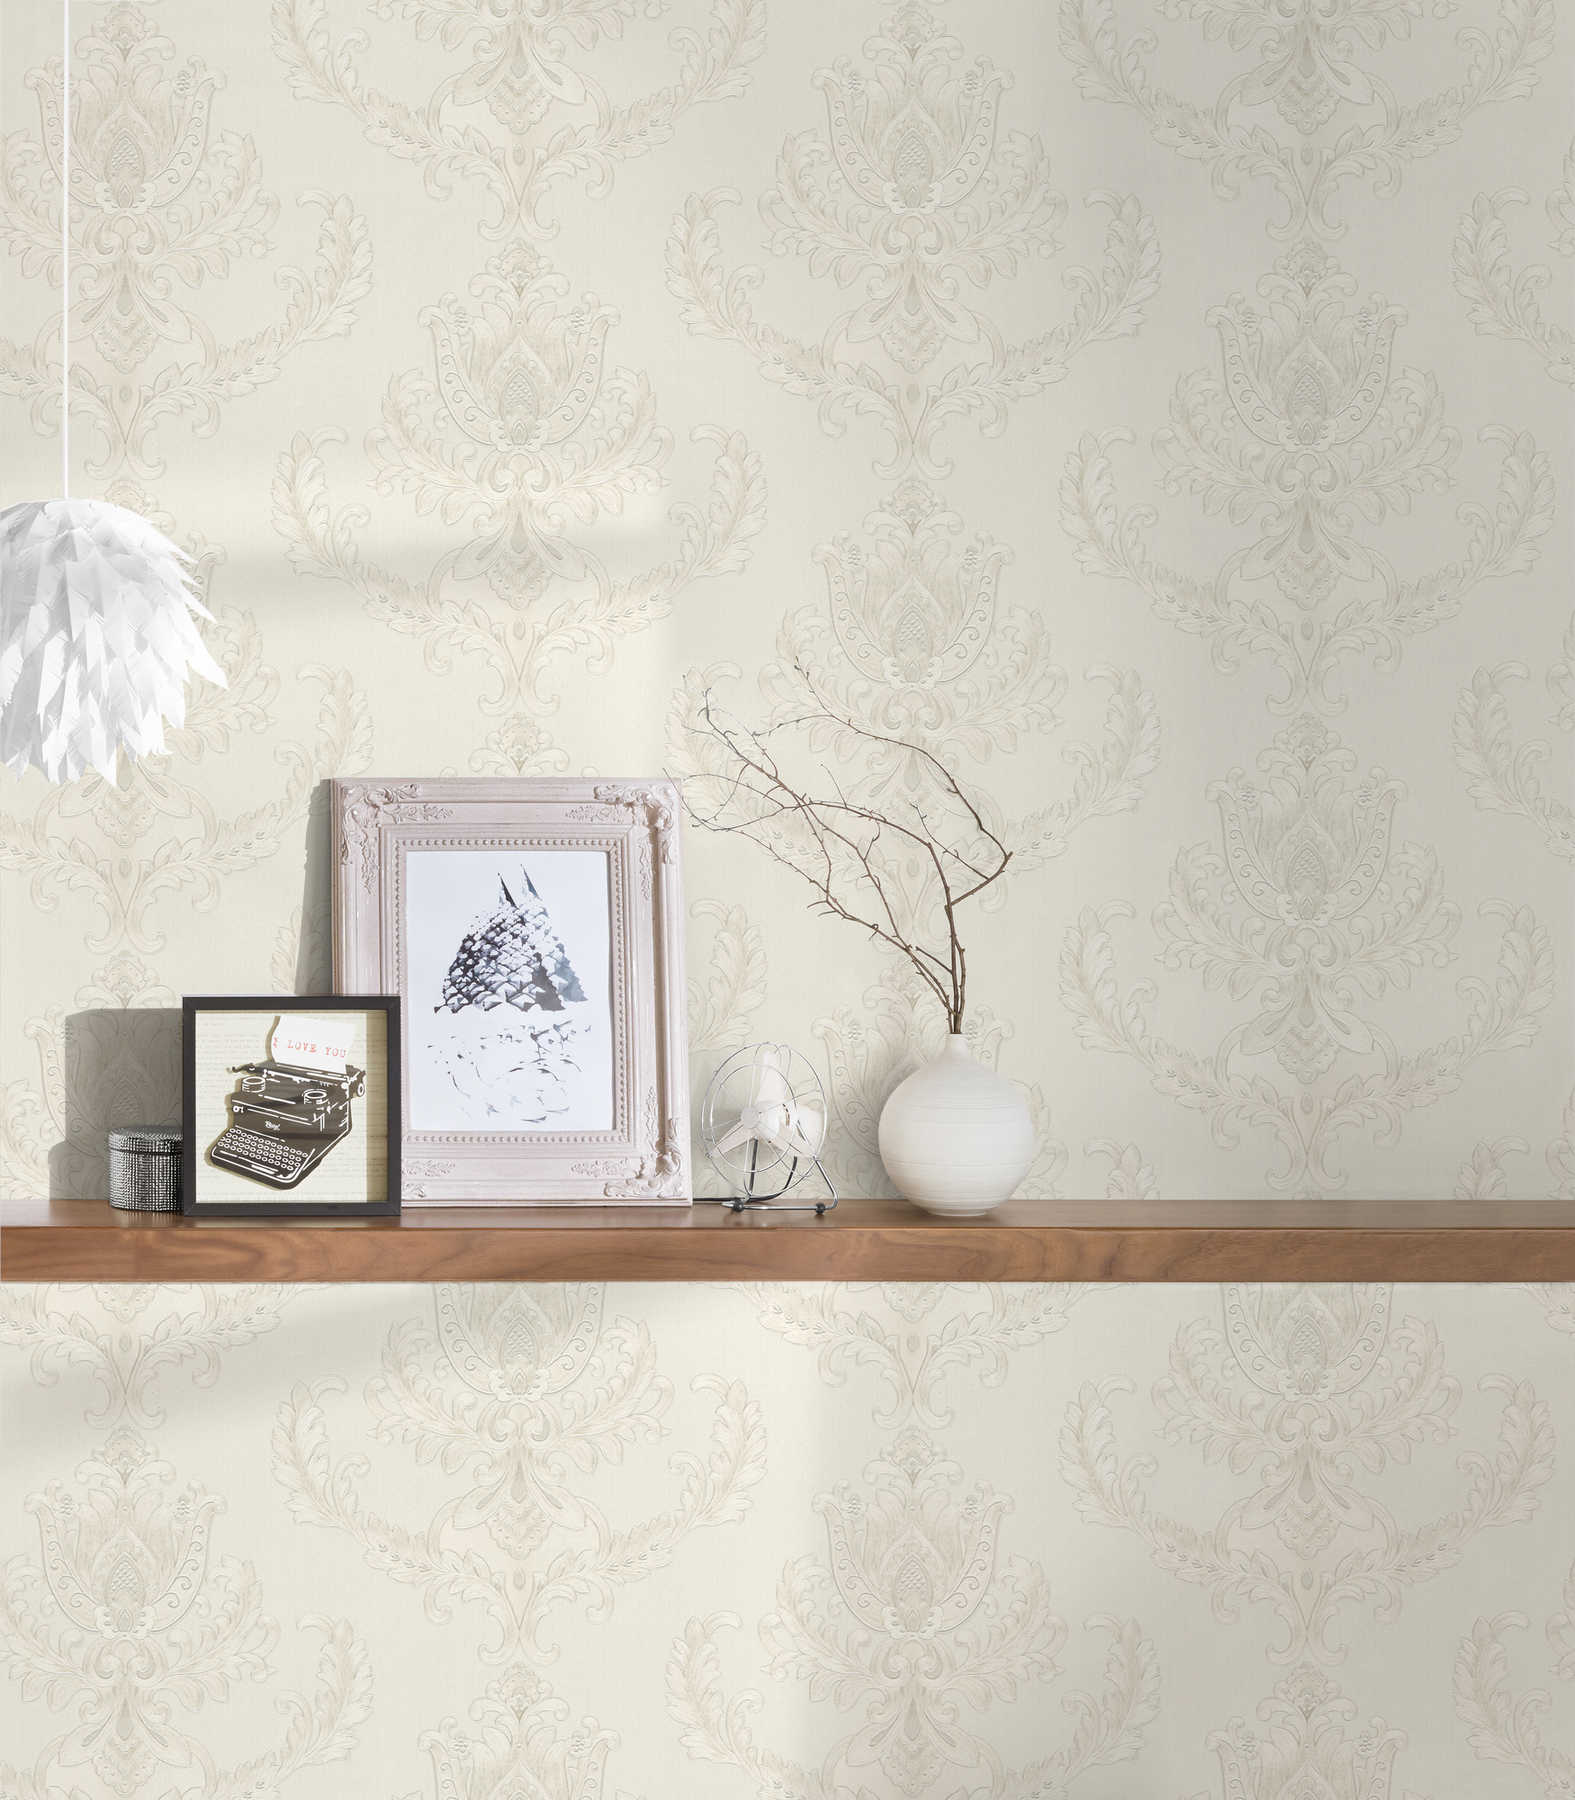             Ornamental wallpaper with floral decor & metallic accent - cream
        